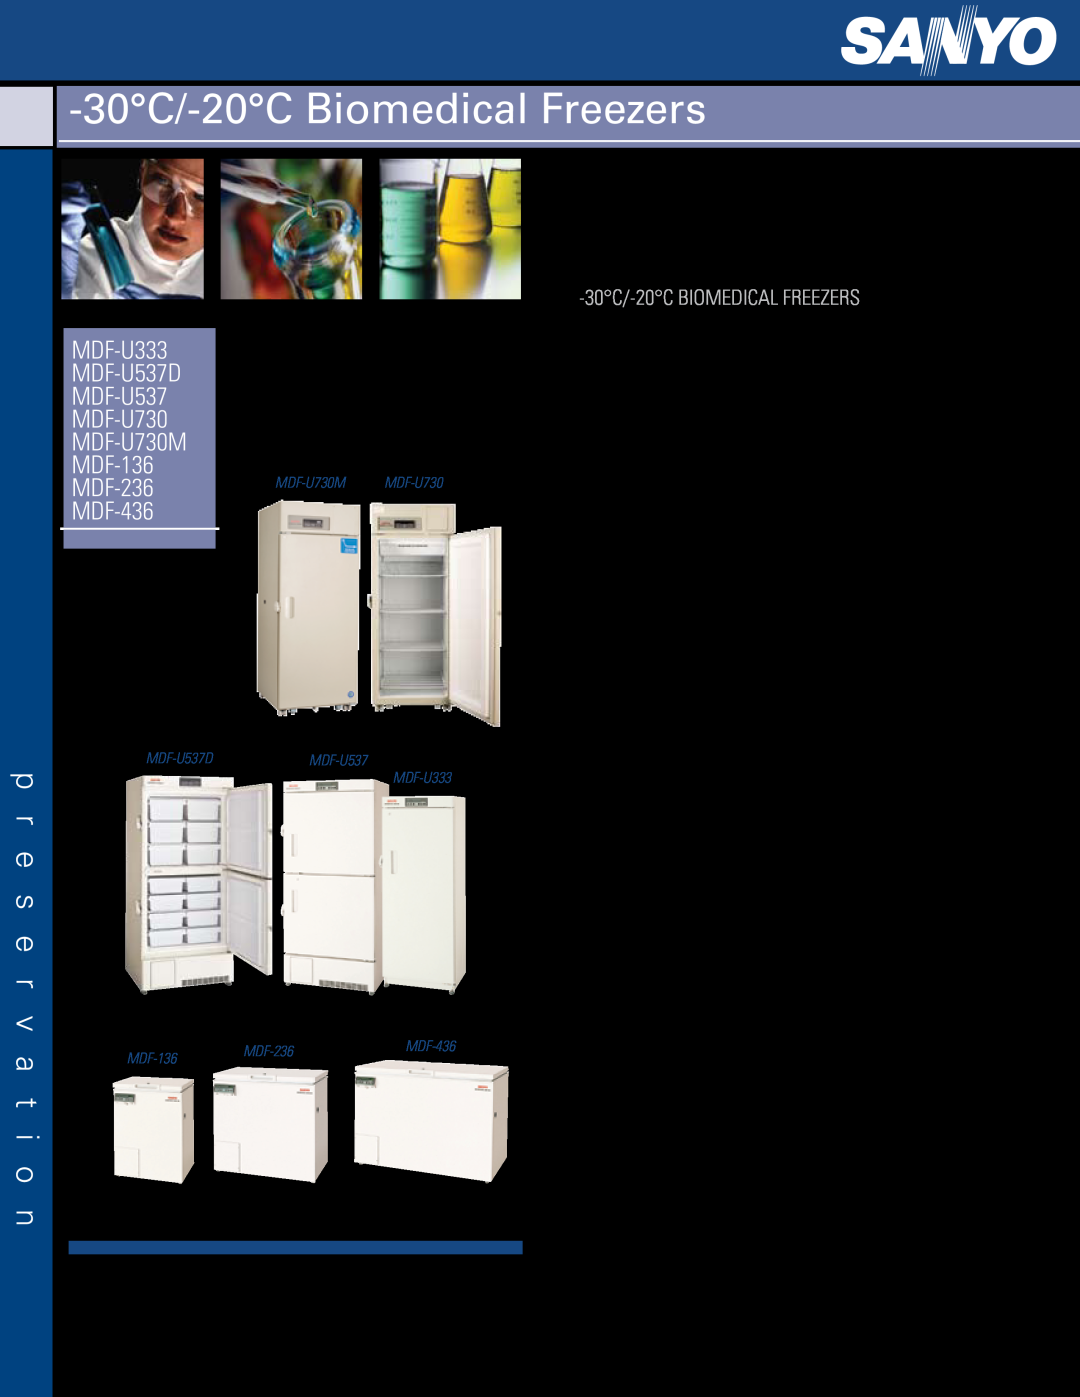 Sanyo MDF-U730M instruction manual Instruction Manual Biomedical Freezer 